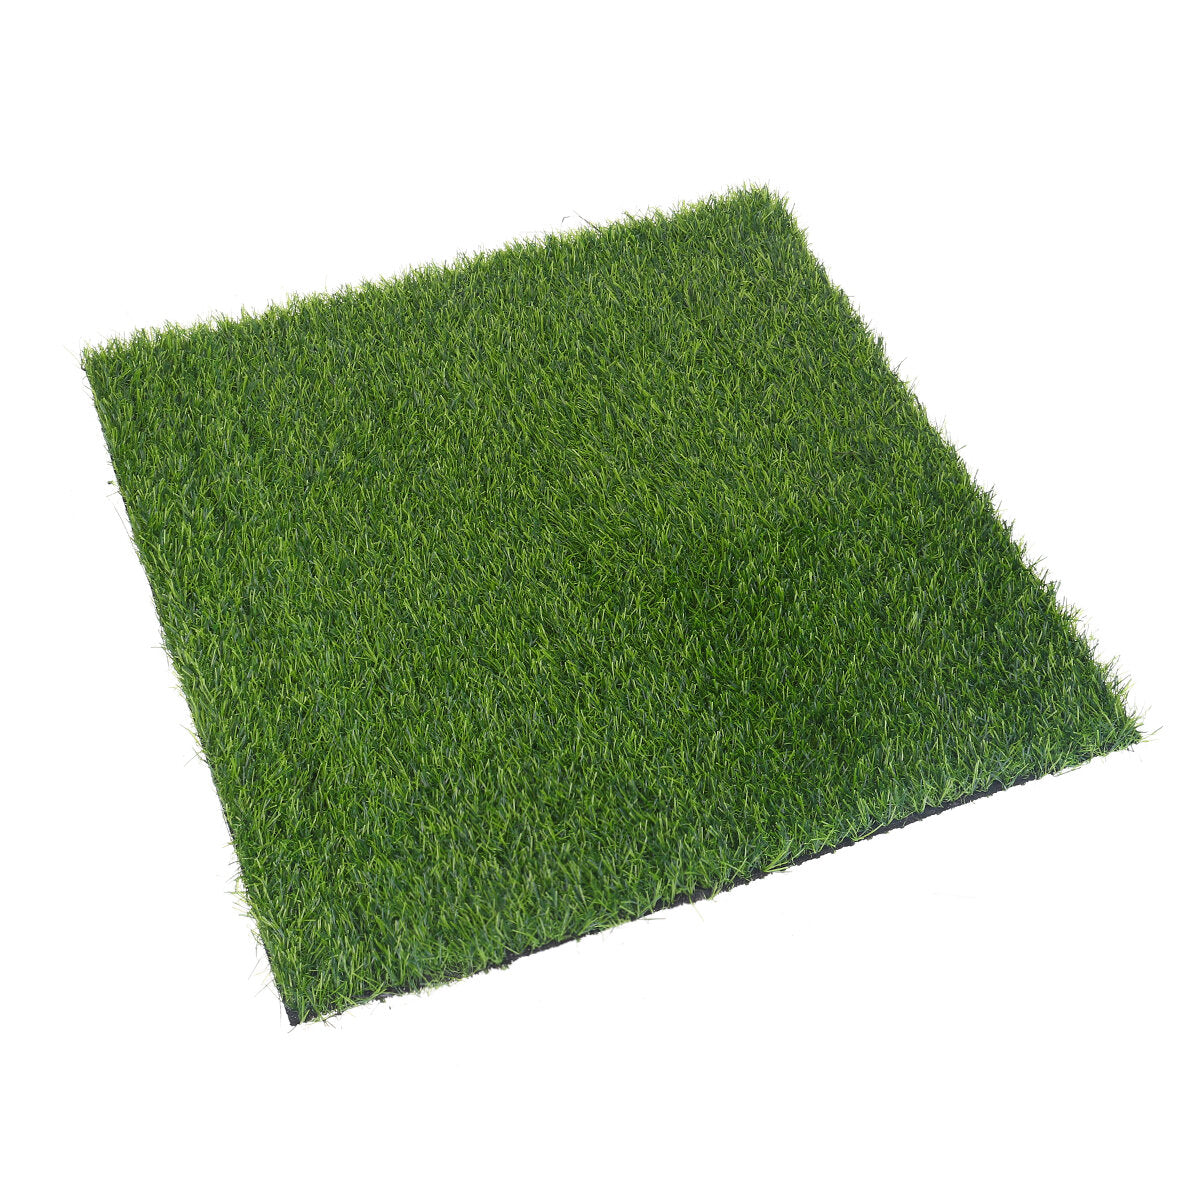 0.5x0.5m Artificial Simulation Carpet Floor Mat Green Artificial Lawn